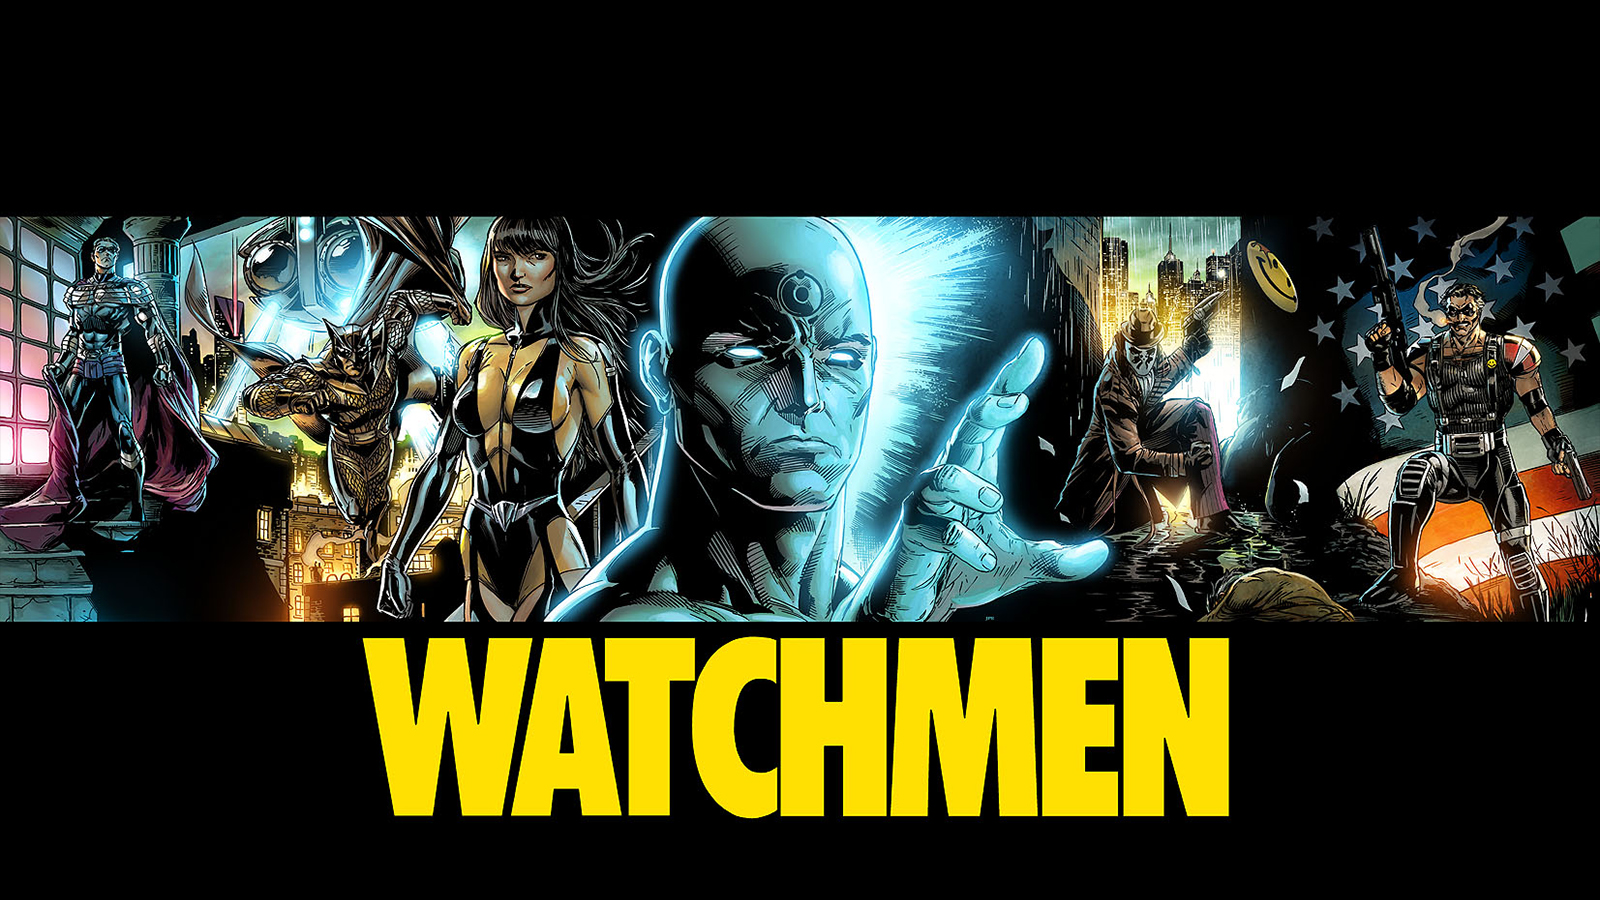 Silk Spectre Owlman DC Comics Doctor Manhattan Rorschach The Comedian Watchmen Nite Owl 1600x900